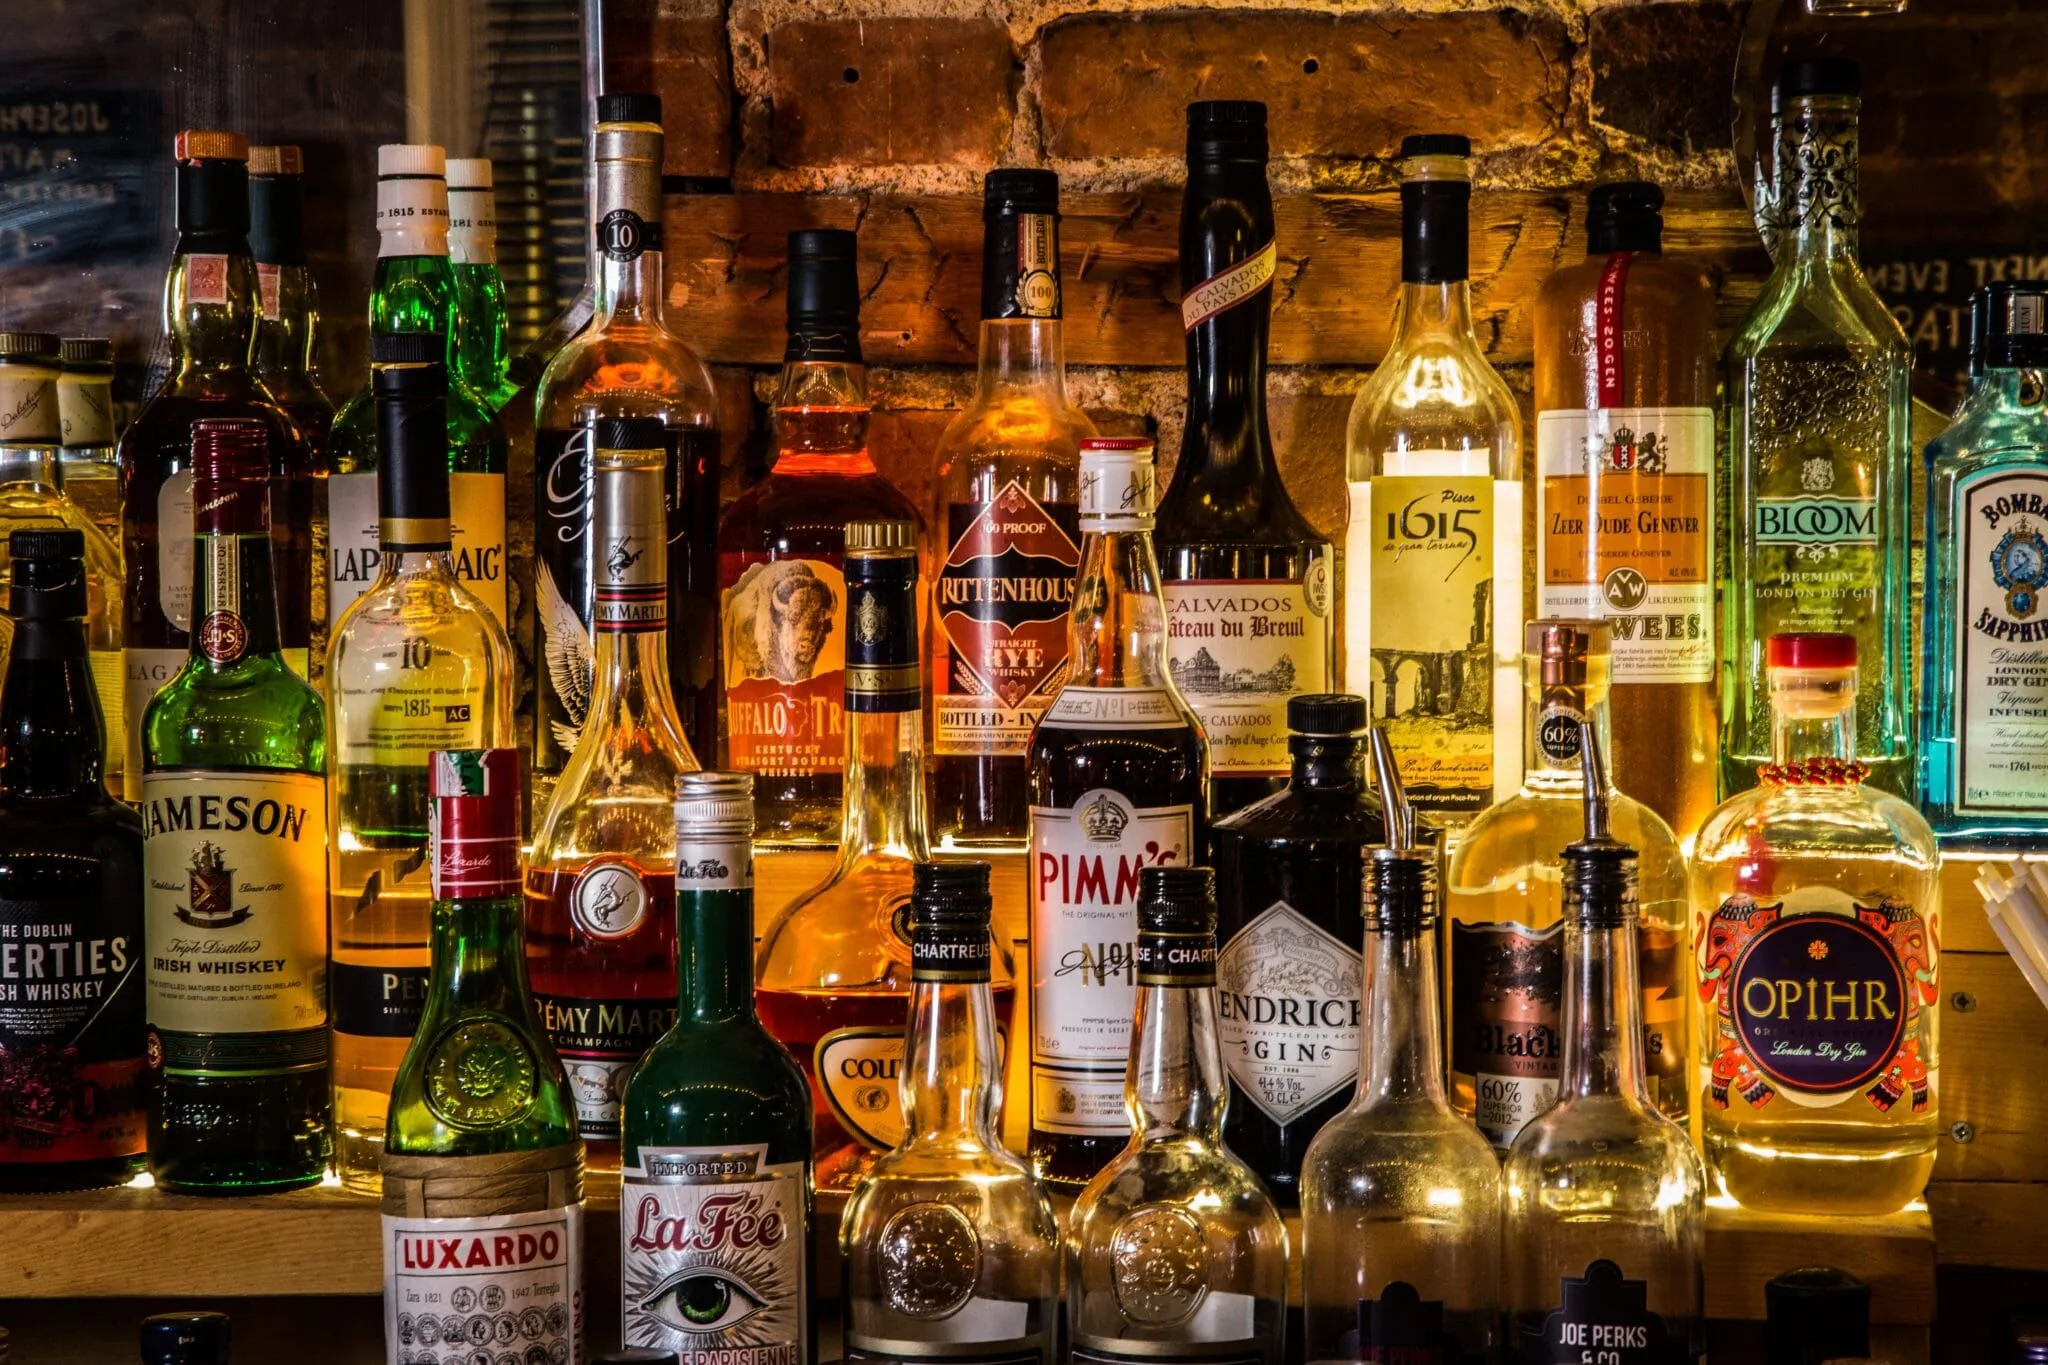 Bar with bottles of spirits